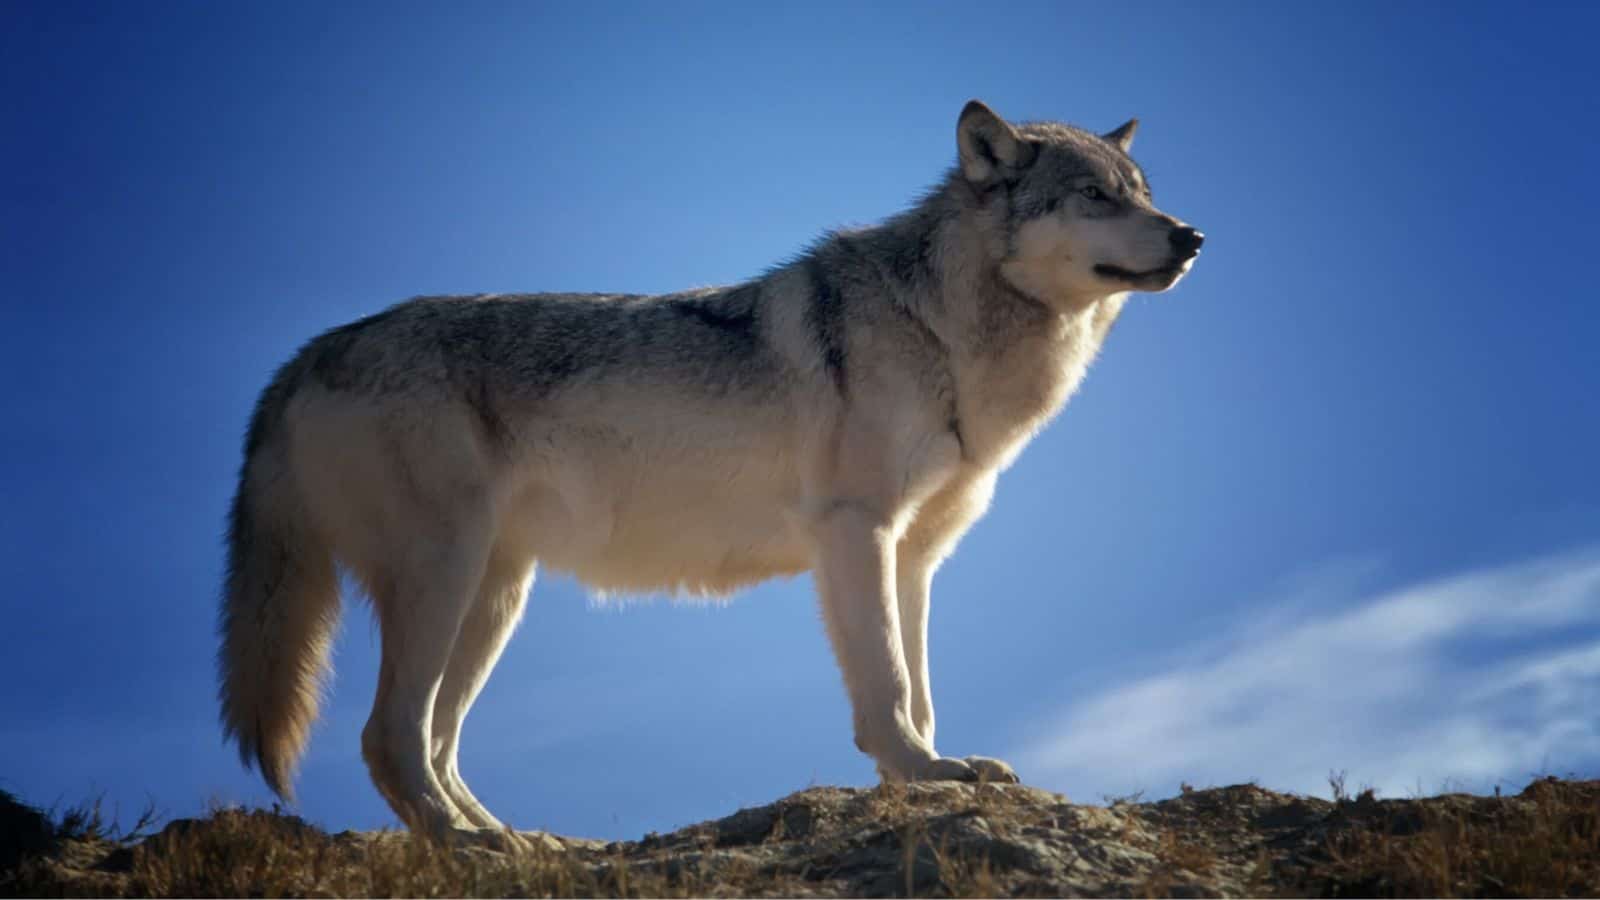 The Colorado Wolf and Wildlife Center, Colorado